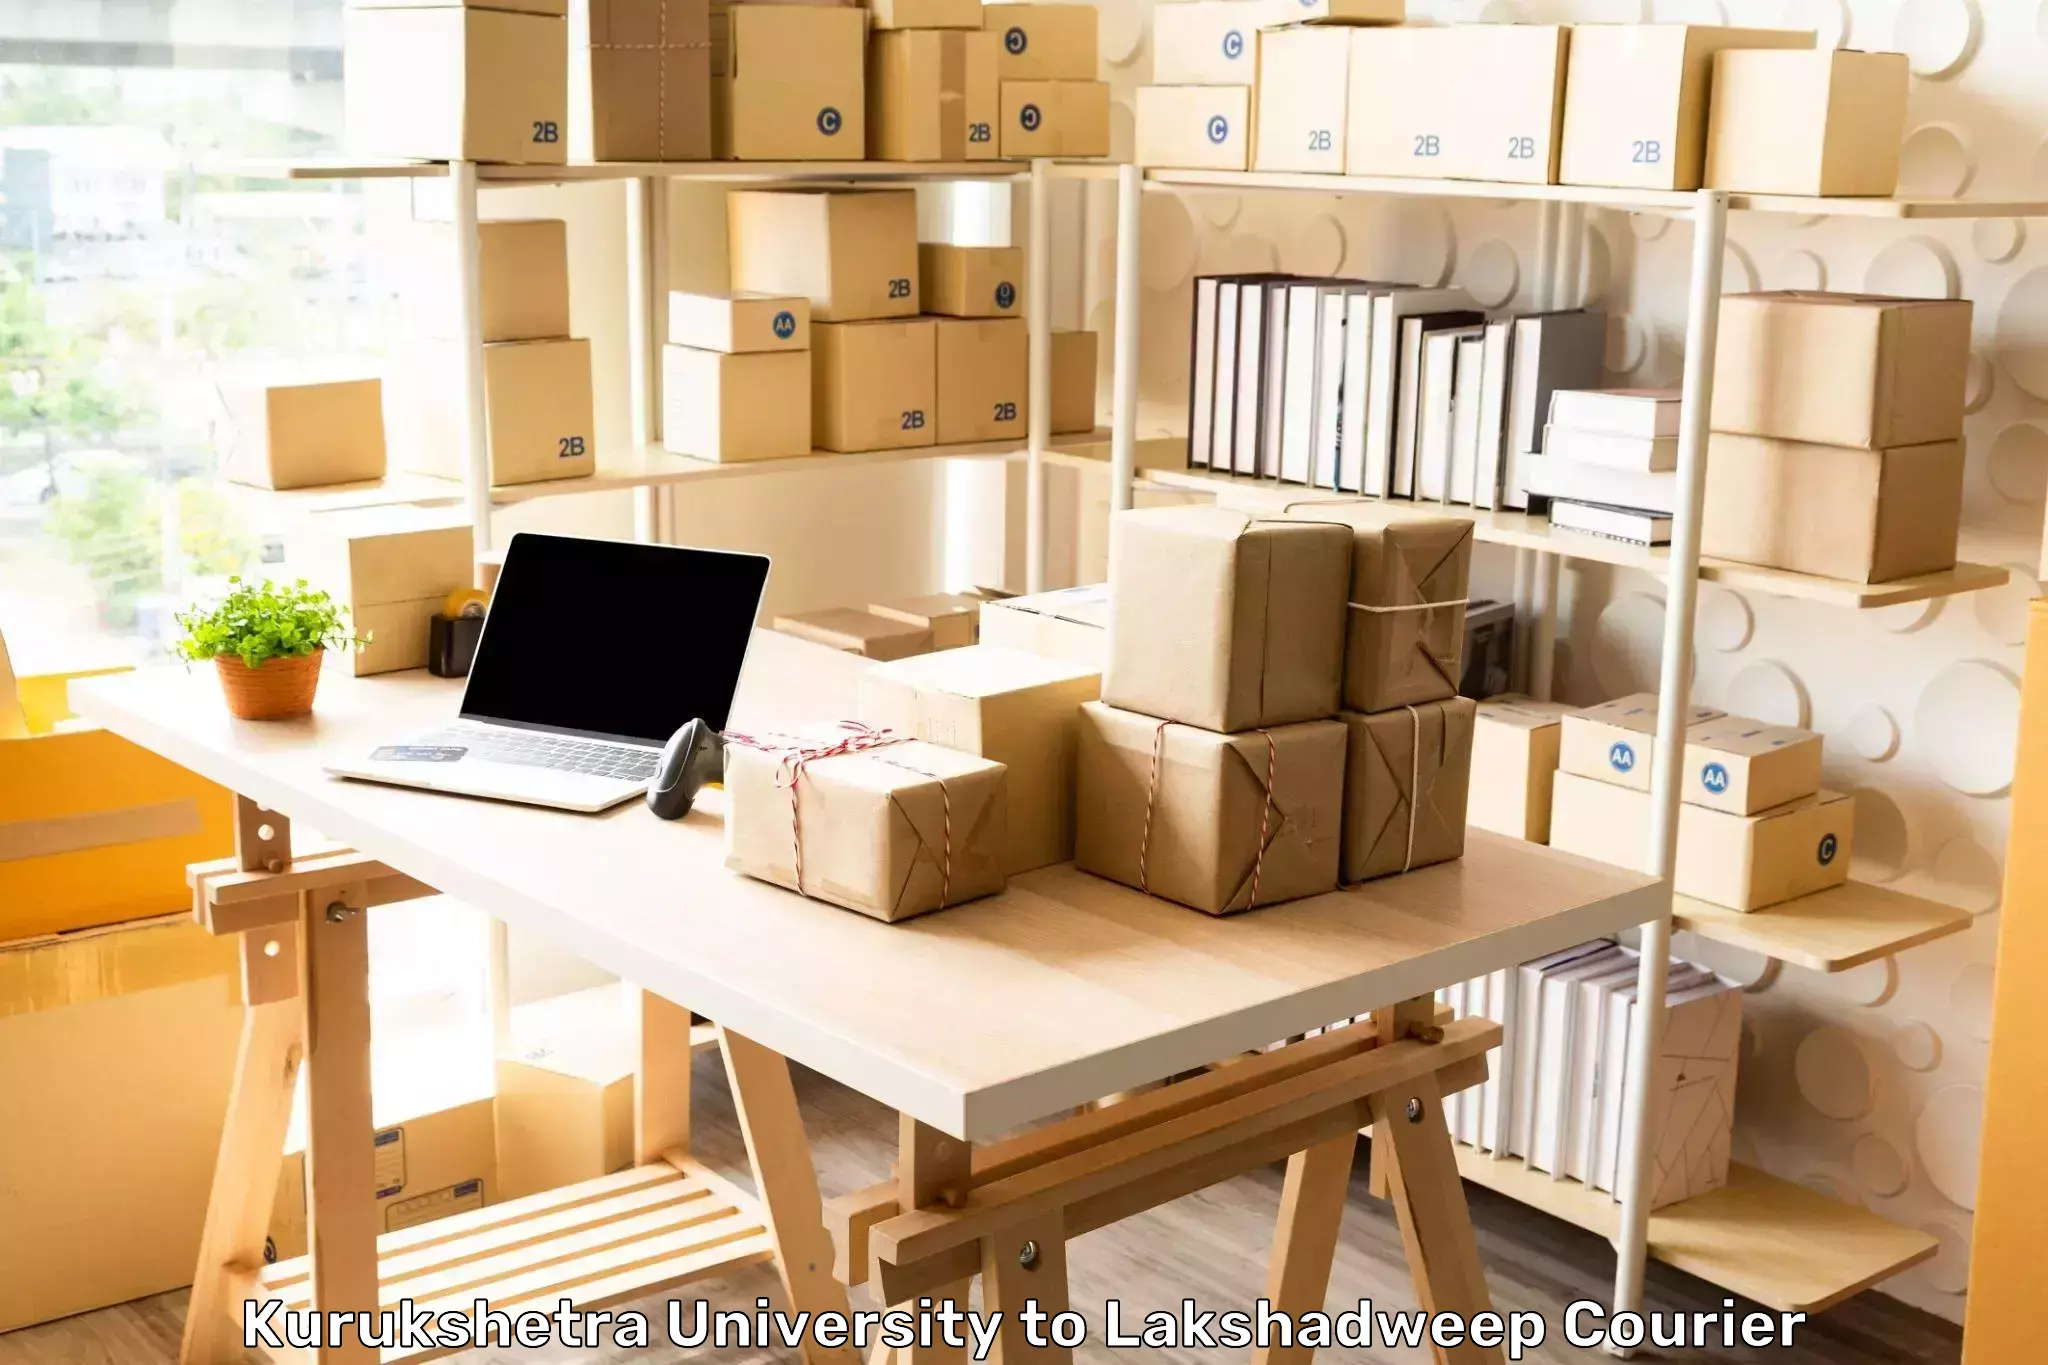 Logistics service provider Kurukshetra University to Lakshadweep